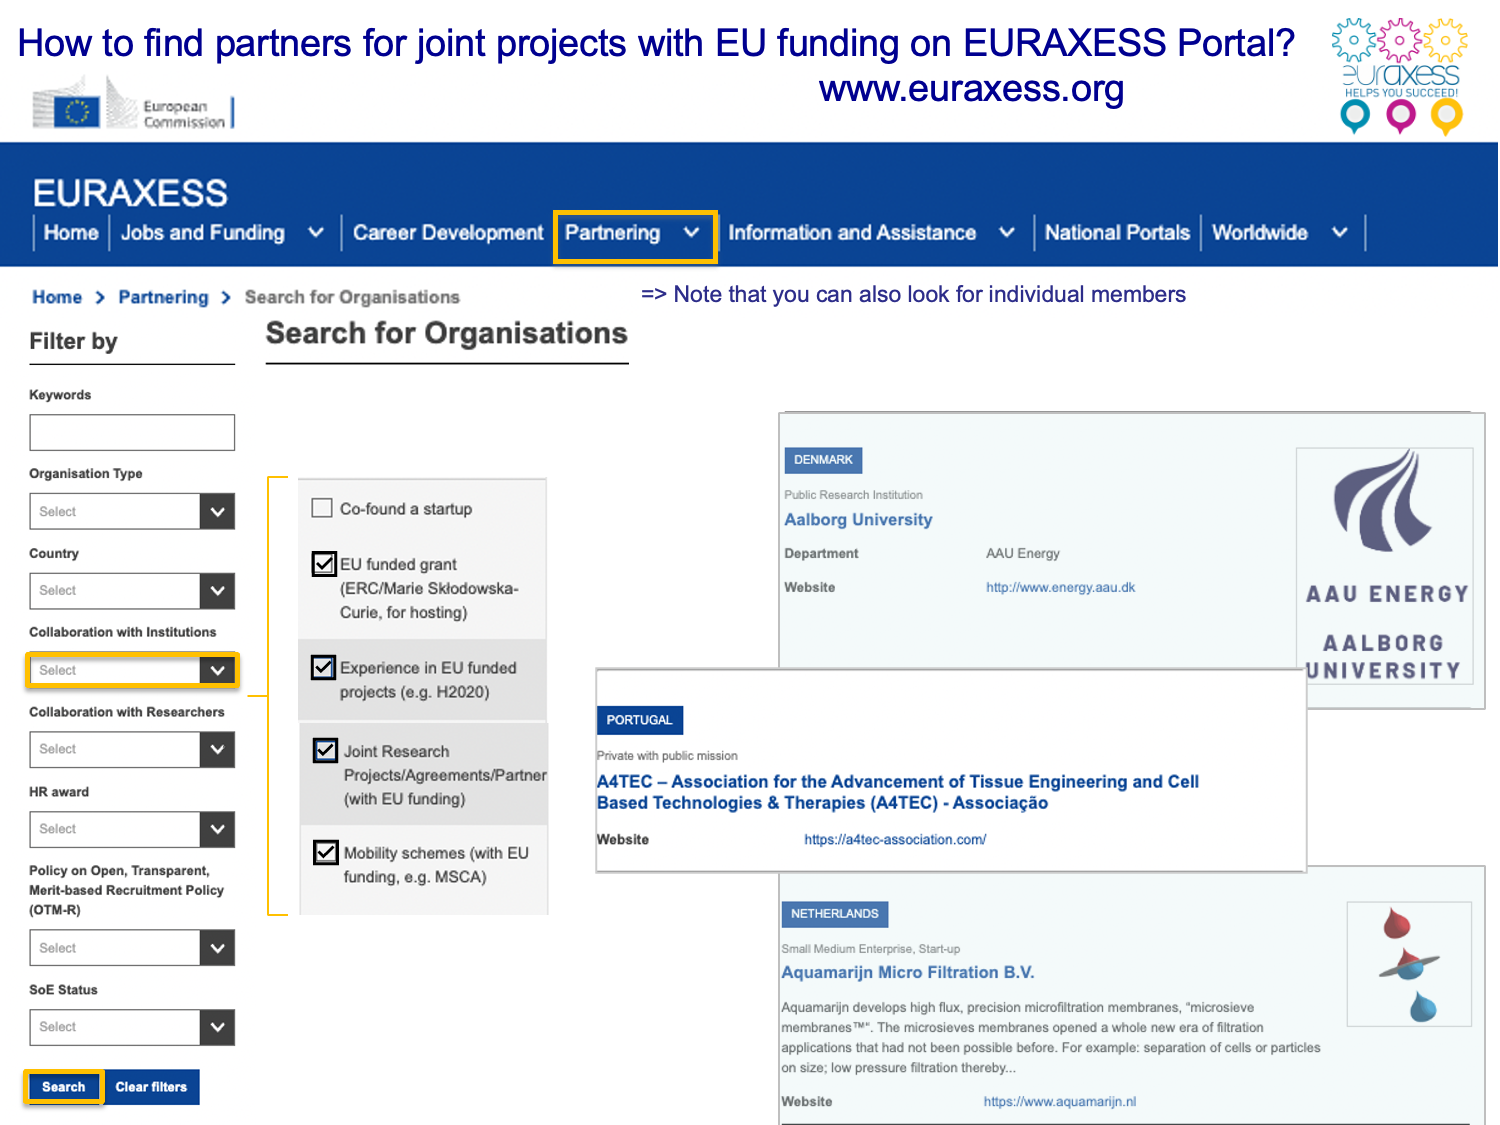 EURXESS Partner